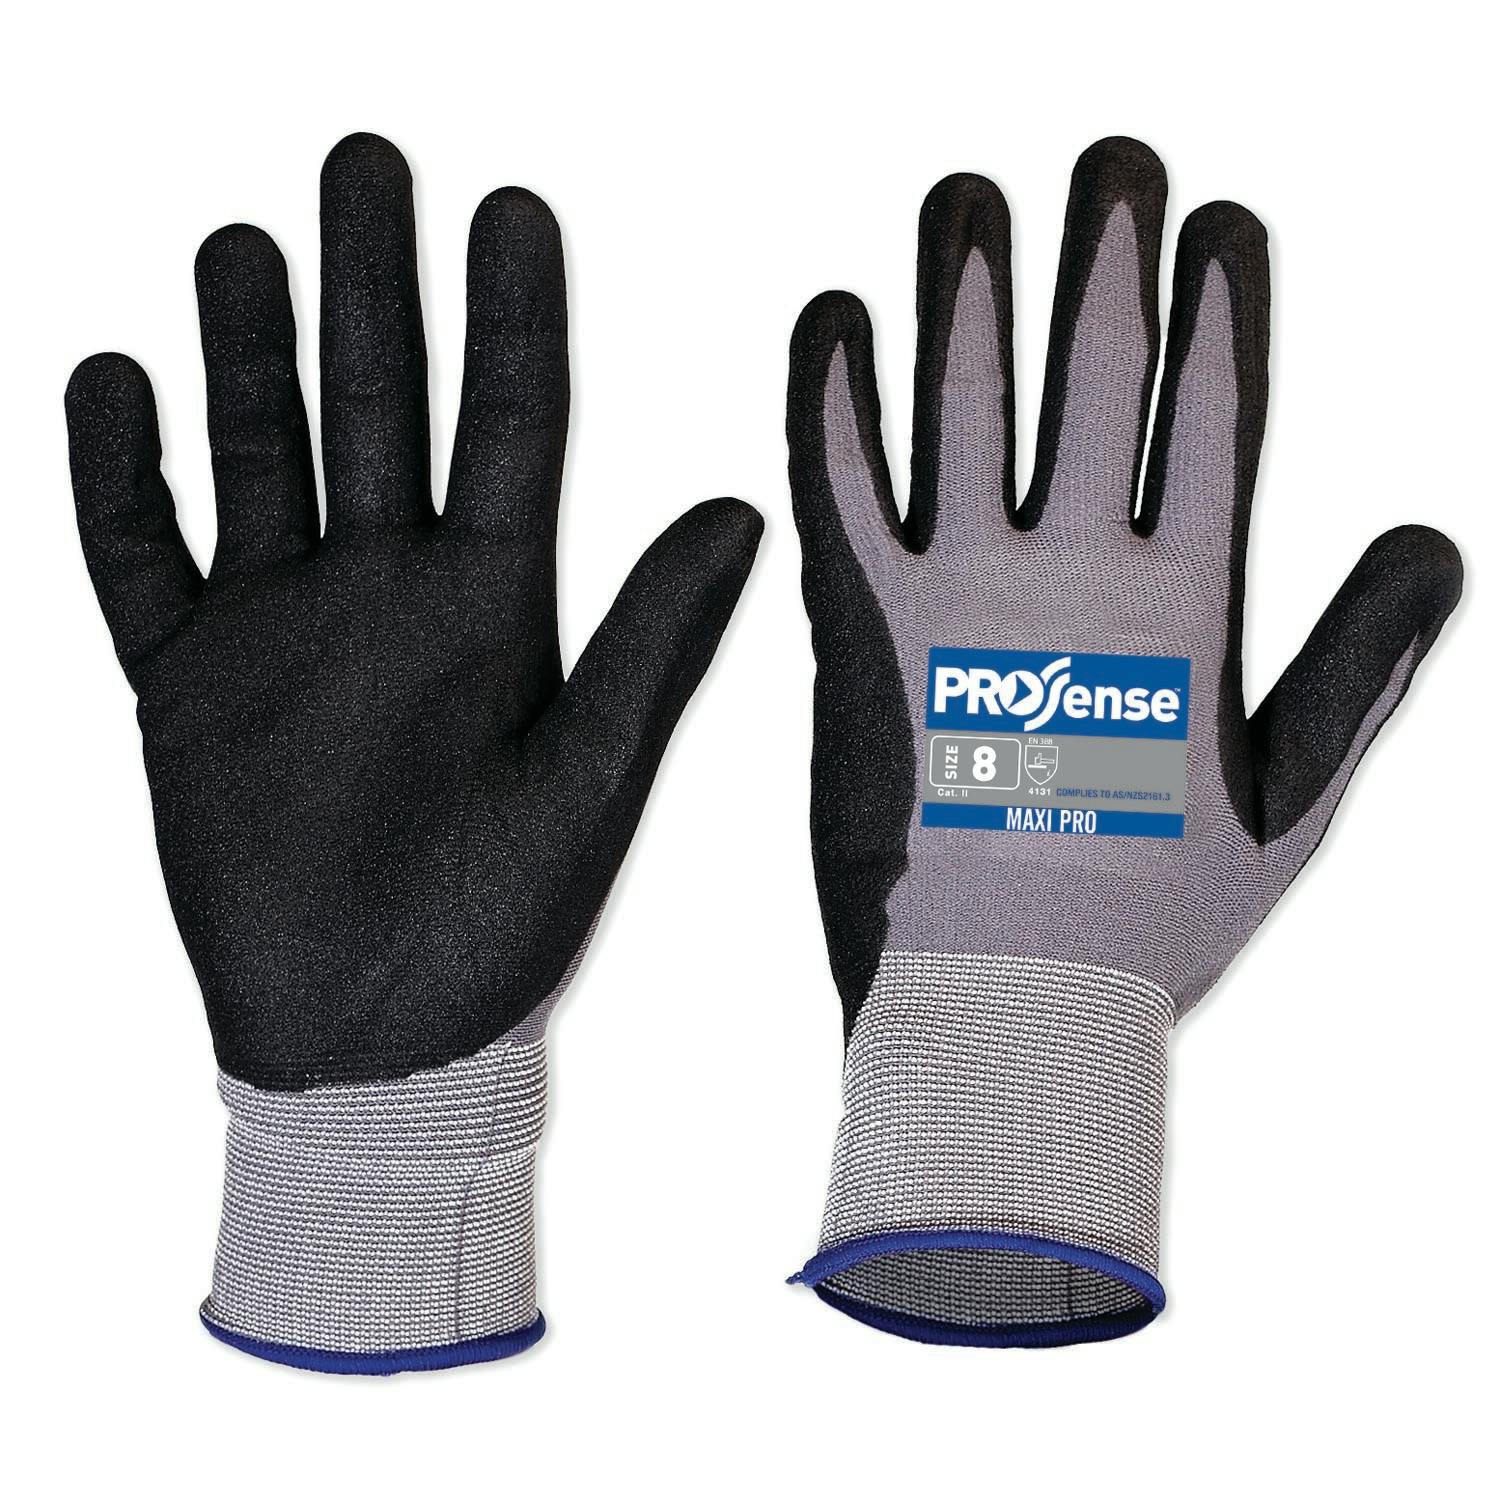 Pro Choice Prosense Maxi-Pro Gloves_3